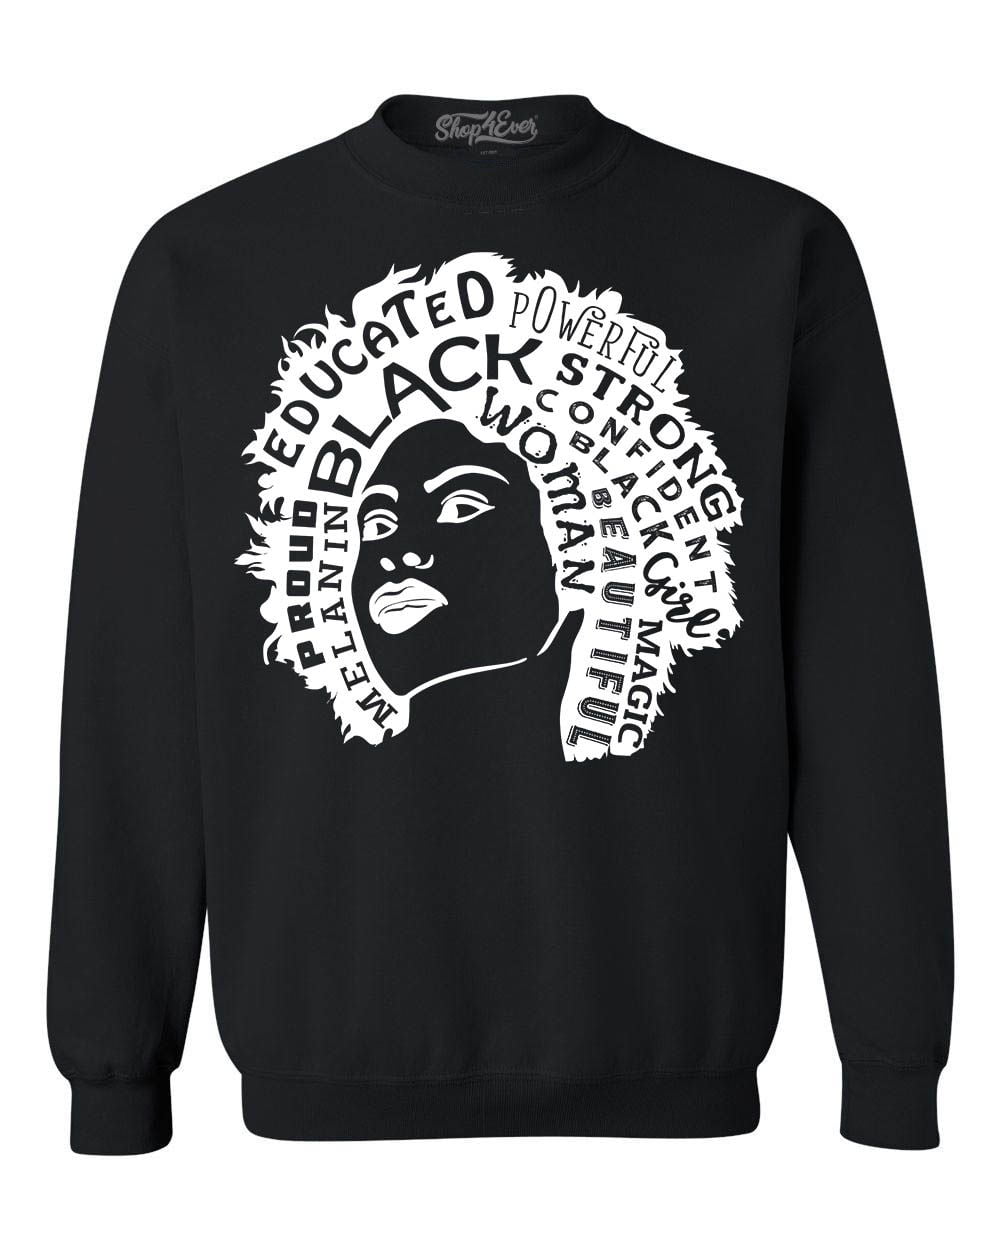 Good American X B Project Self Made Woman Black Crewneck Sweatshirt Size XL  NEW